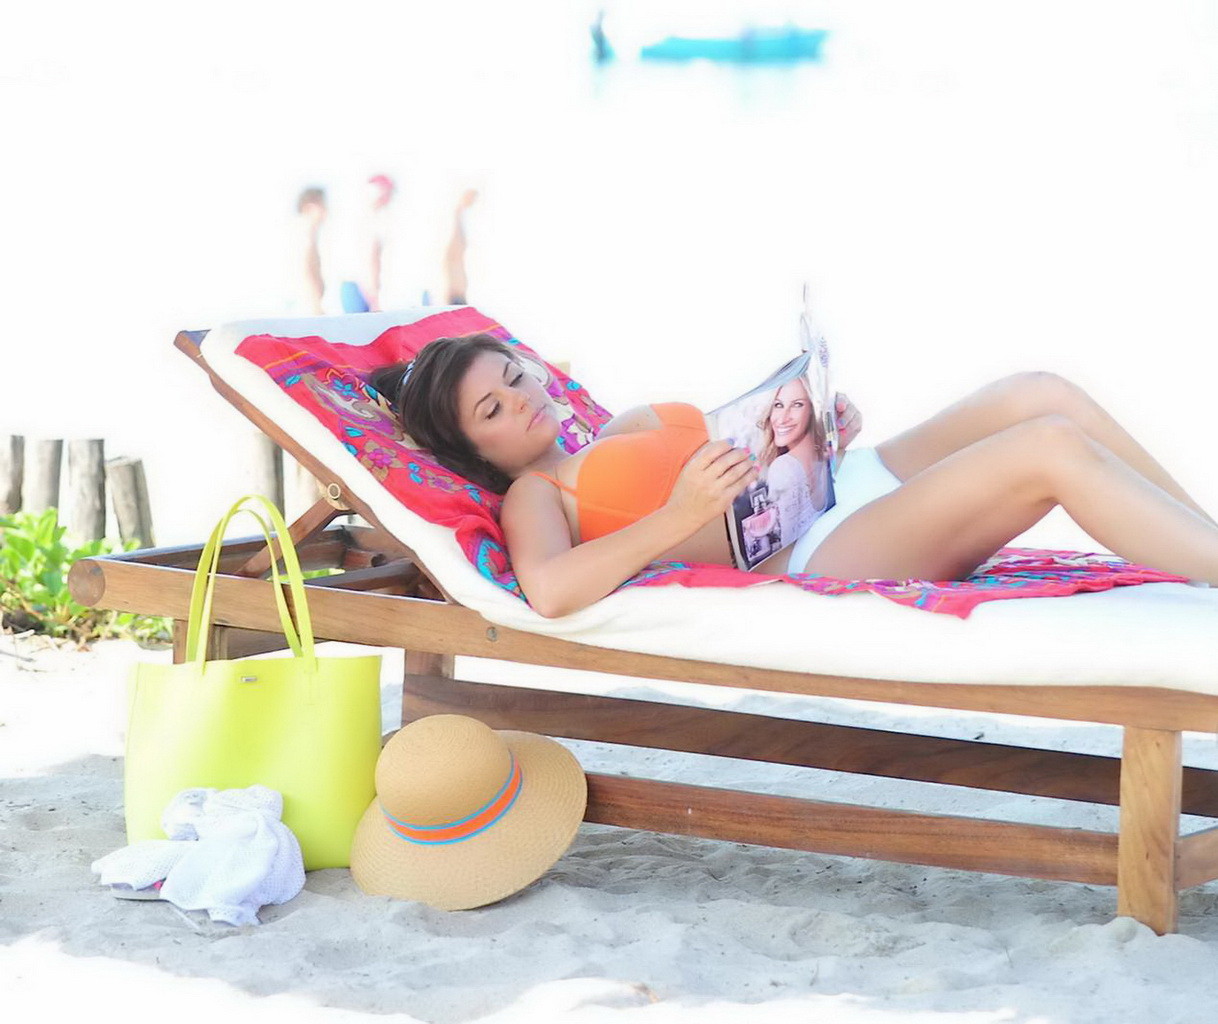 Tiffani thiessen con un bikini naranja y una braguita blanca en la playa de México
 #75205400